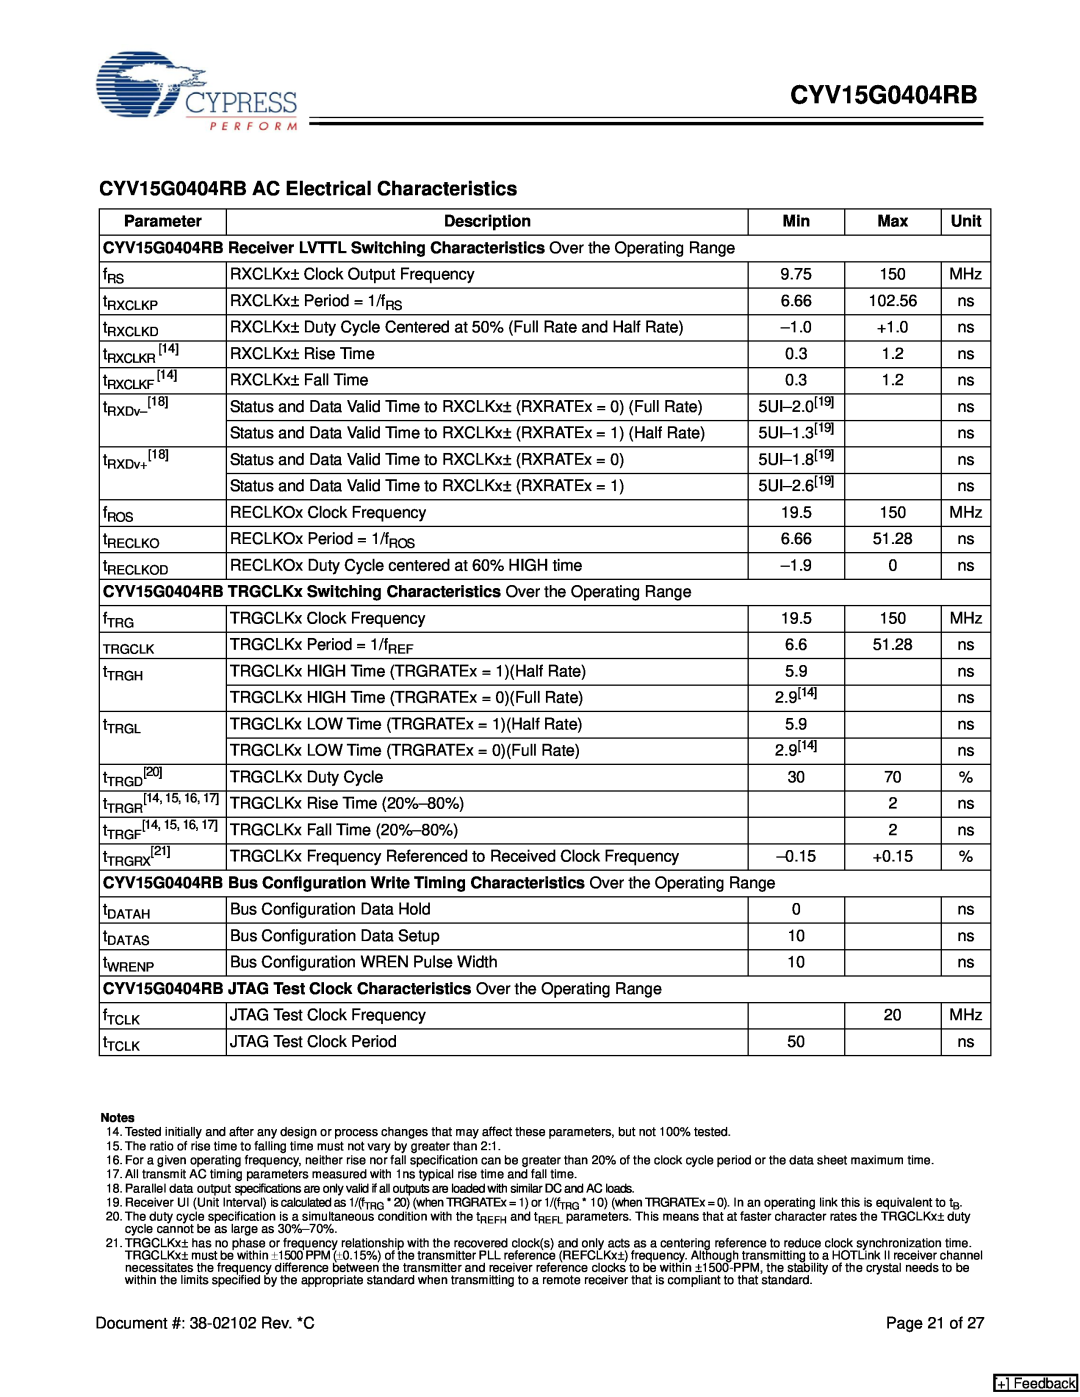 Cypress manual CYV15G0404RB AC Electrical Characteristics 